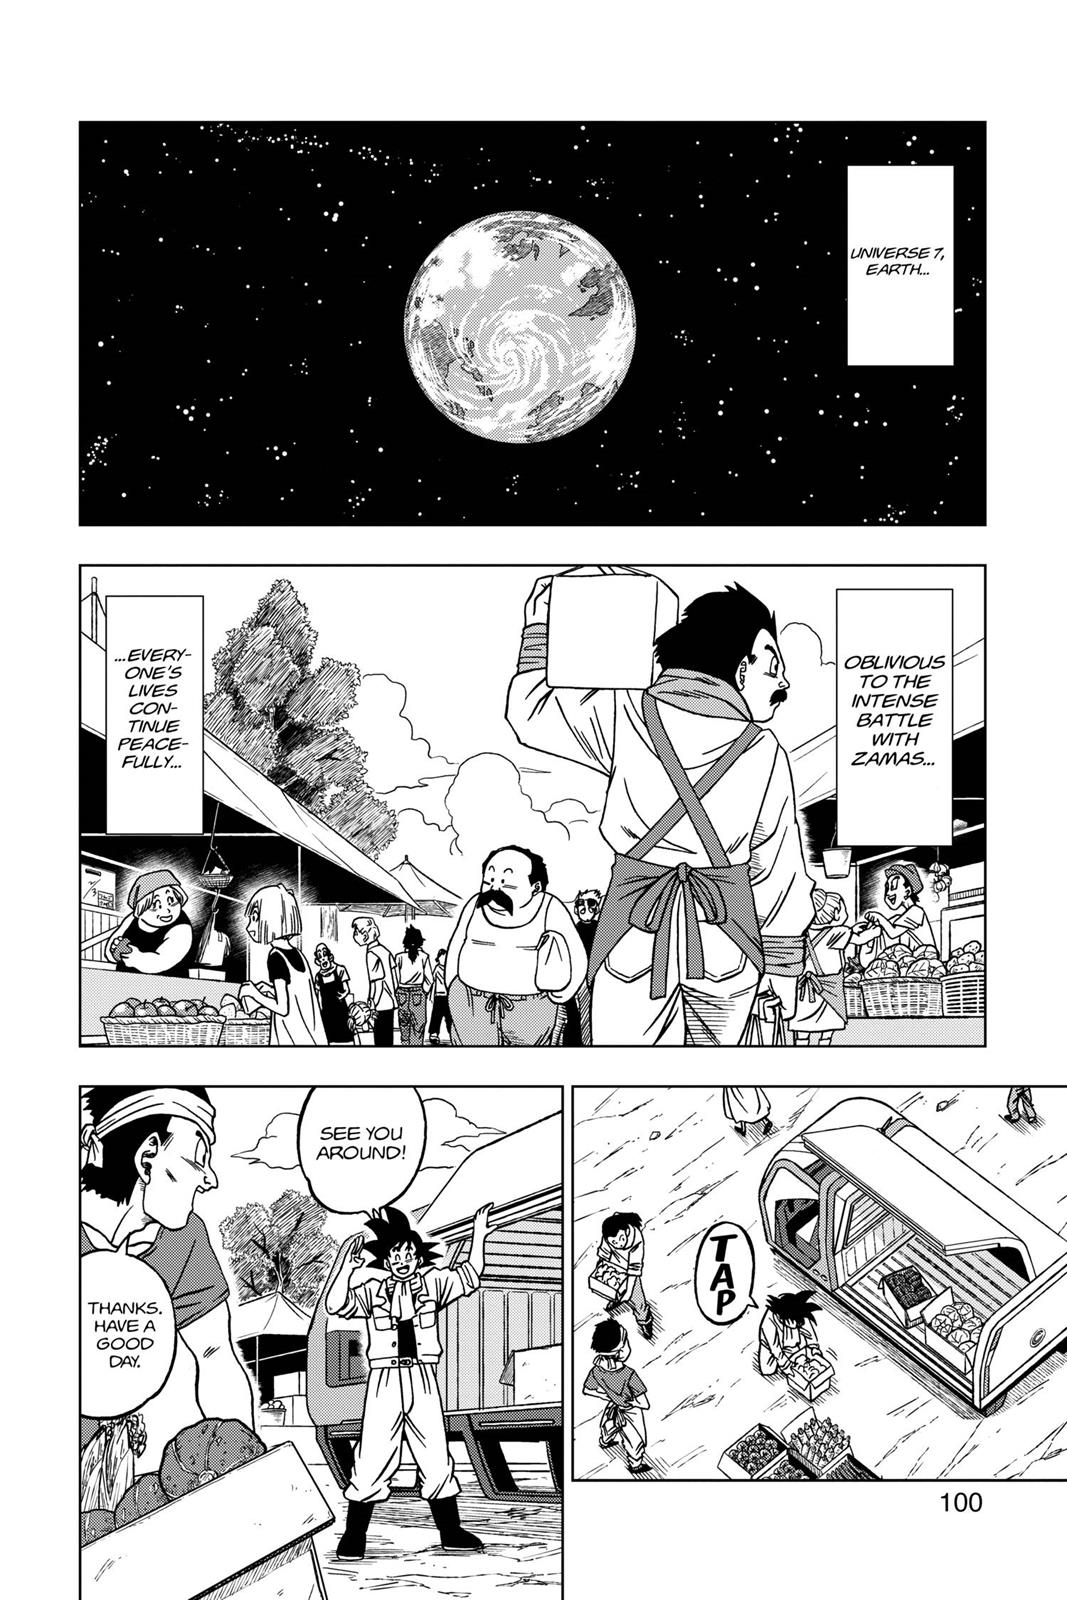 DUHRAGON BALL — Dragon Ball Super Manga ch. 27-29